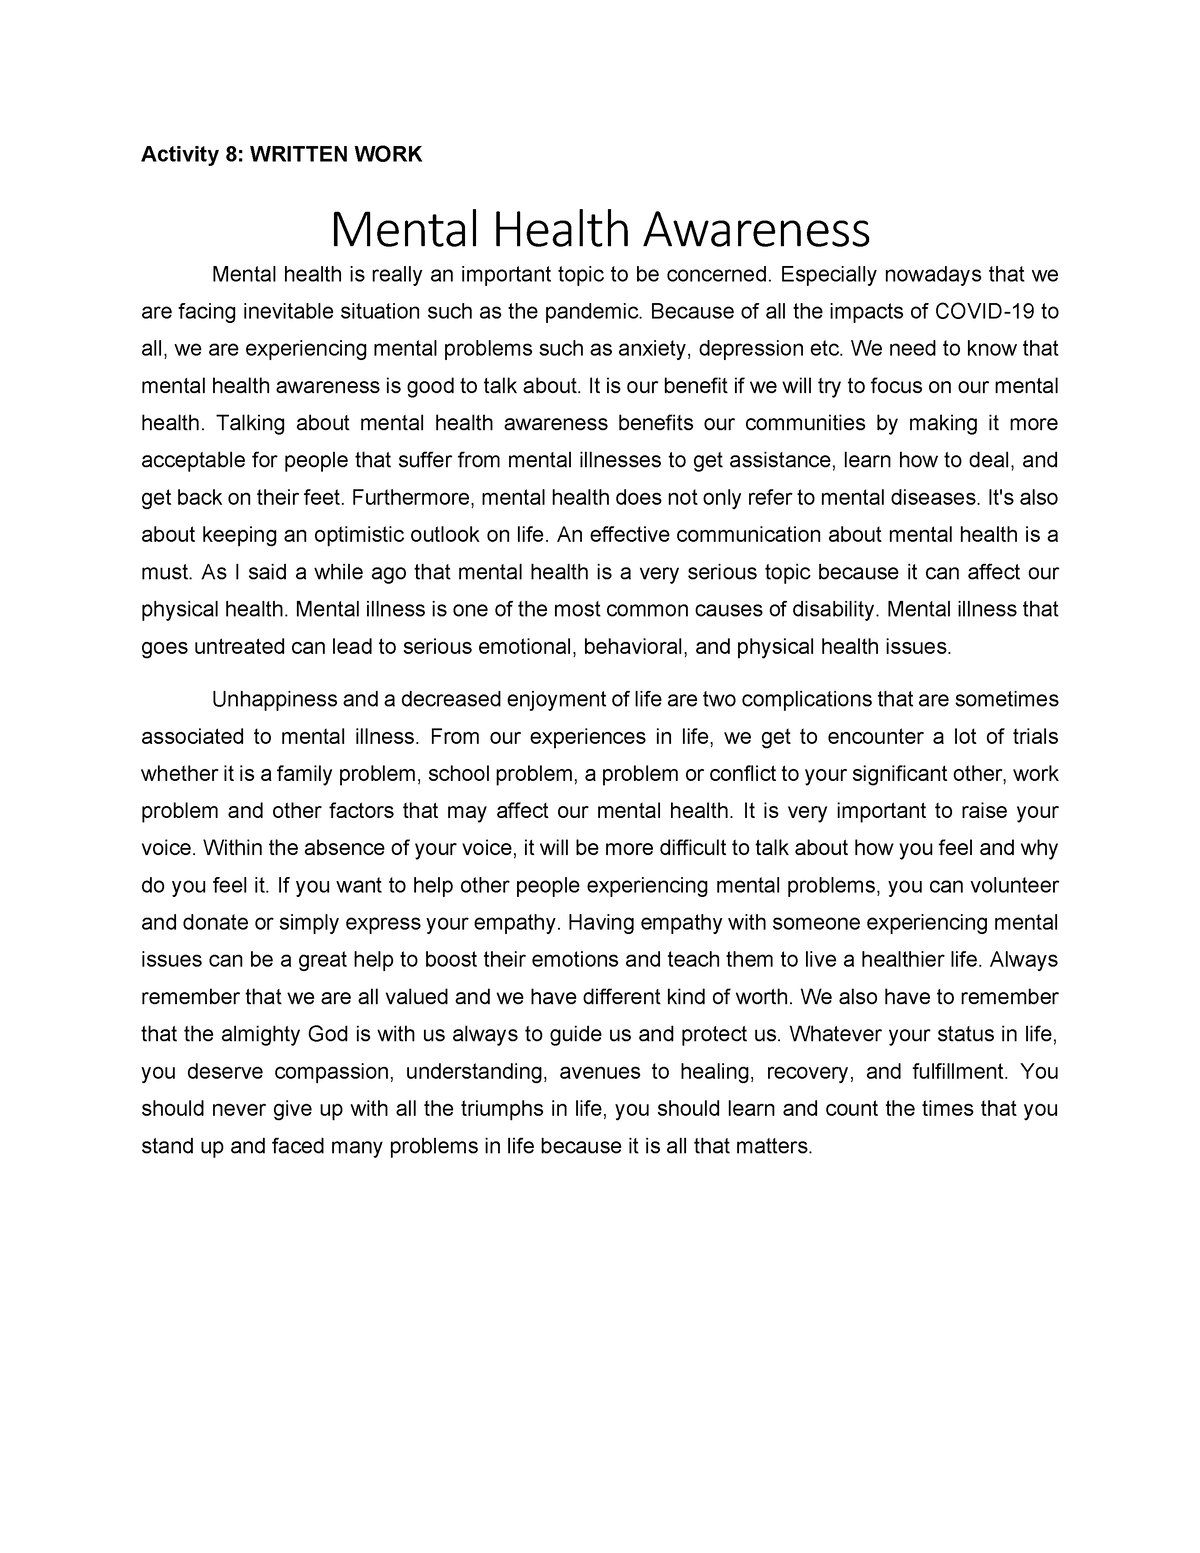 health awareness essay brainly